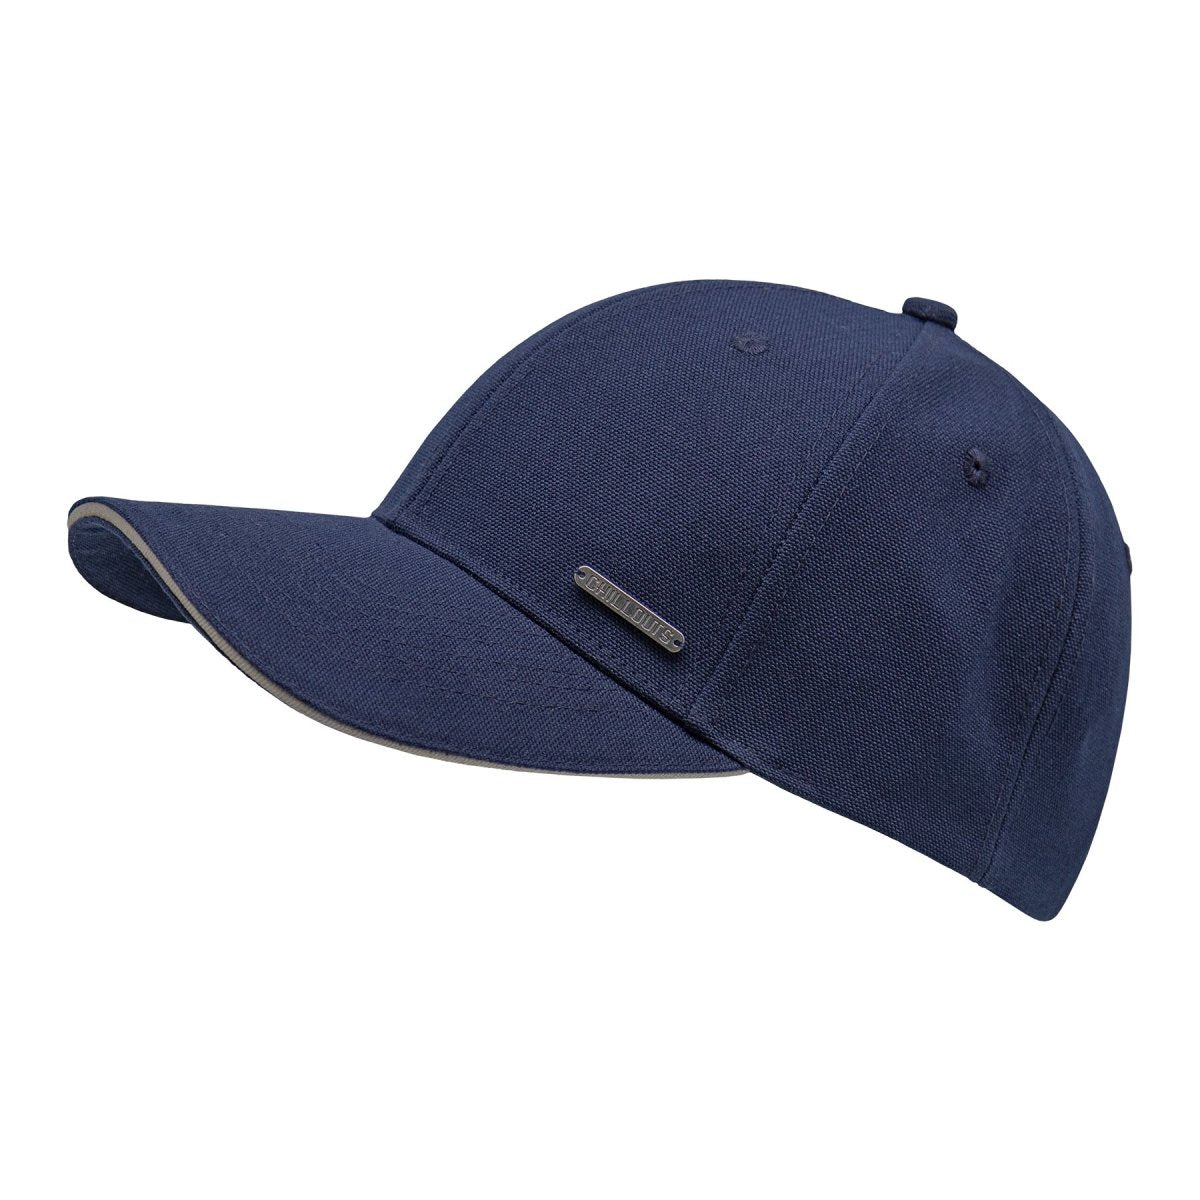 Baseball Cap für Herren - Caps jetzt bei Chillouts – Headwear nachhaltige chillouts